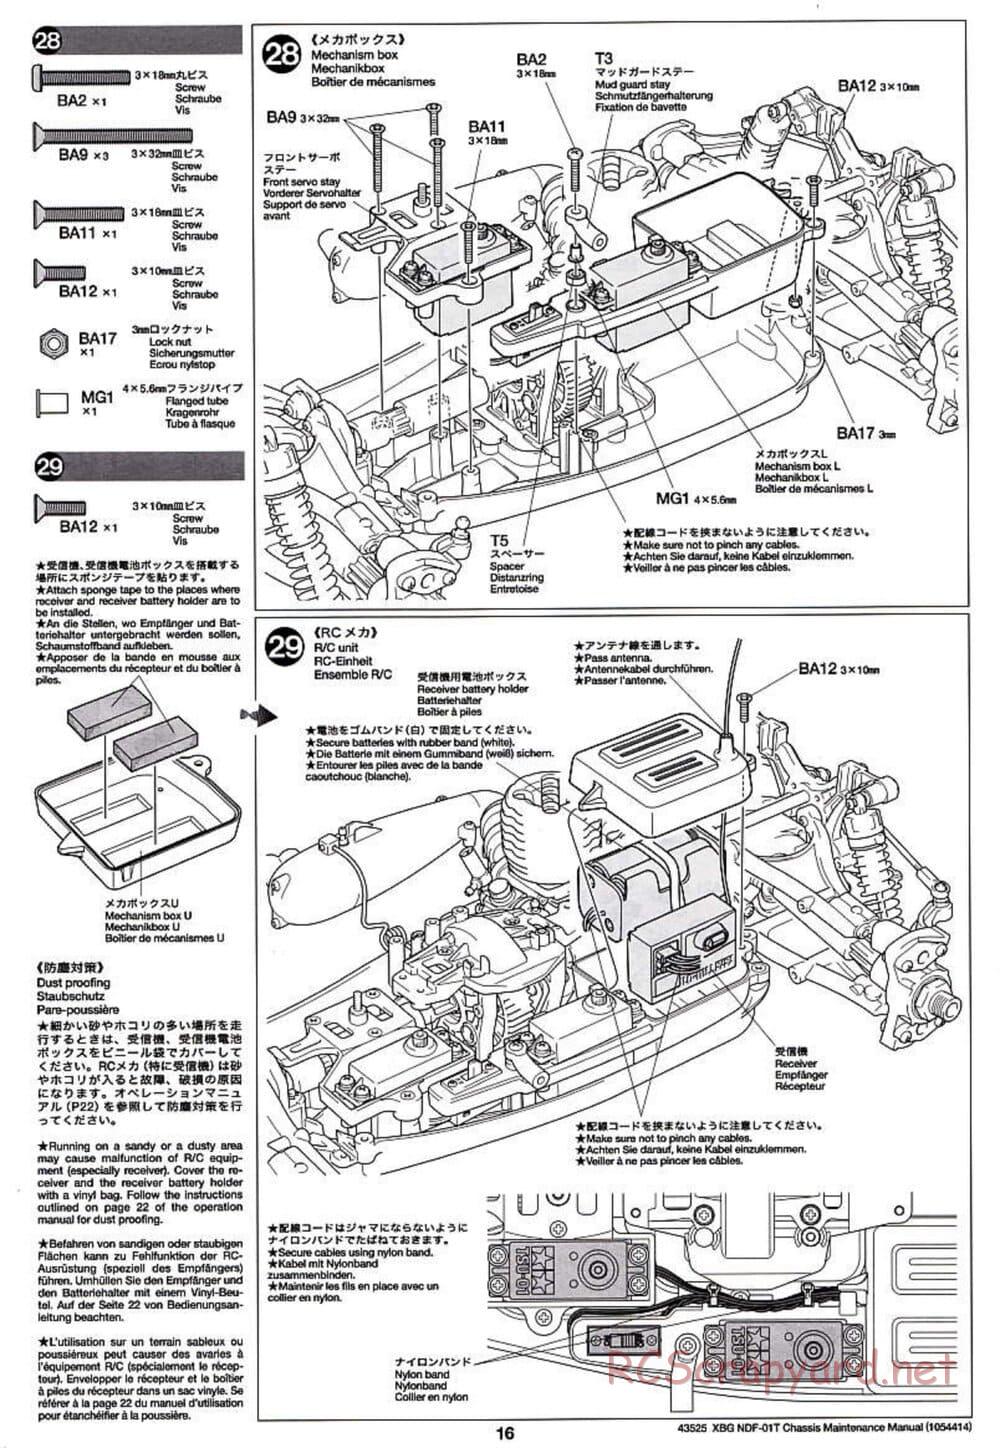 Tamiya - Nitro Crusher - NDF-01T - Maintenance Manual - Page 16